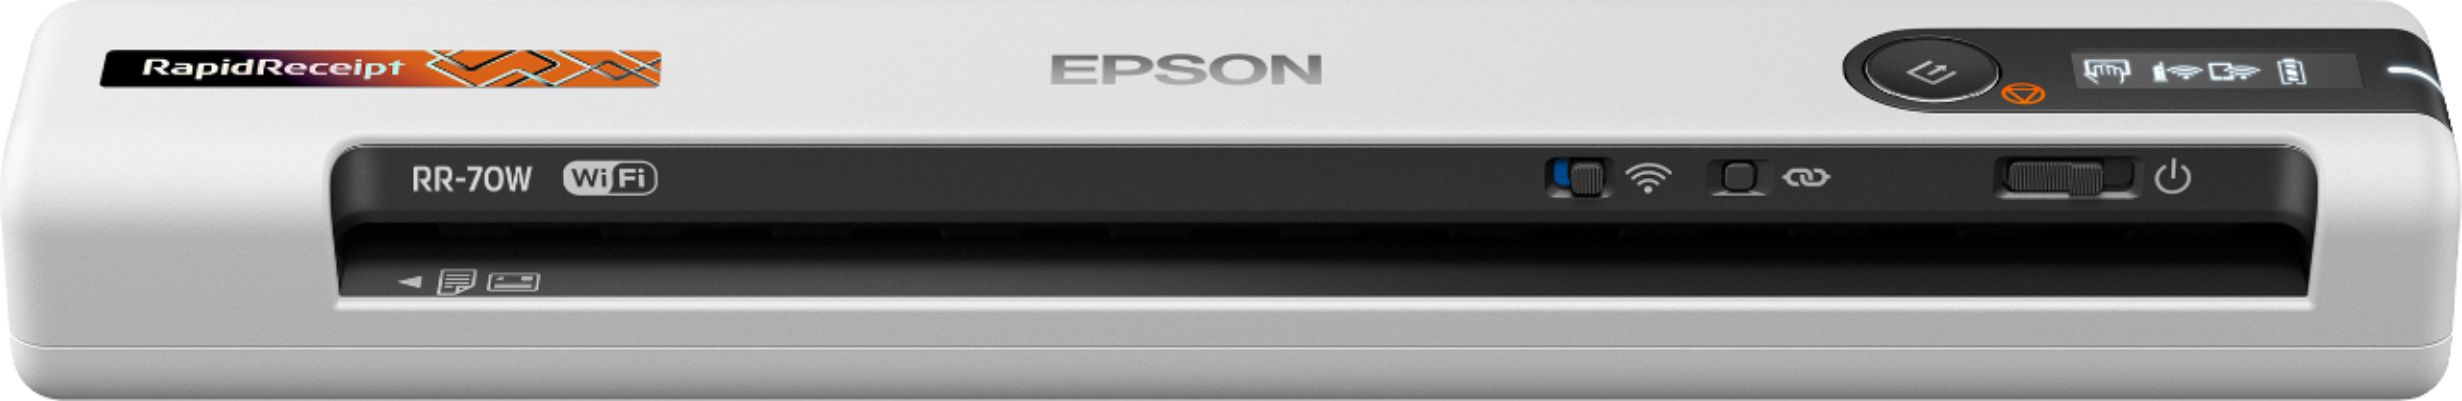 Epson - RapidReceipt RR-70W Wireless Mobile Receipt and Color Document Scanner